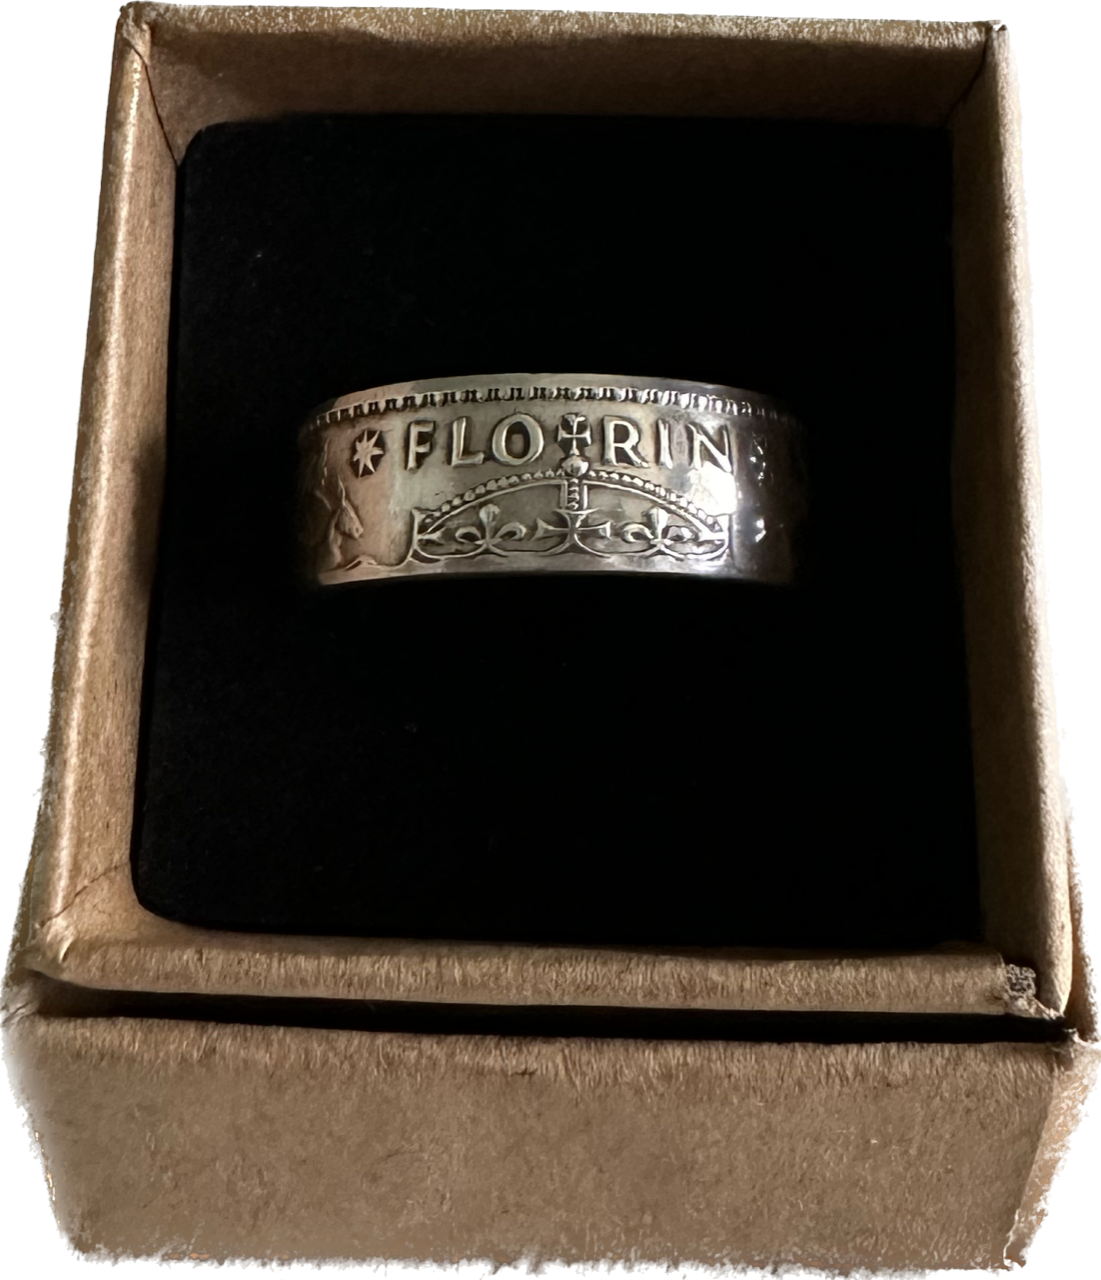 Australia Silver Florin Ring